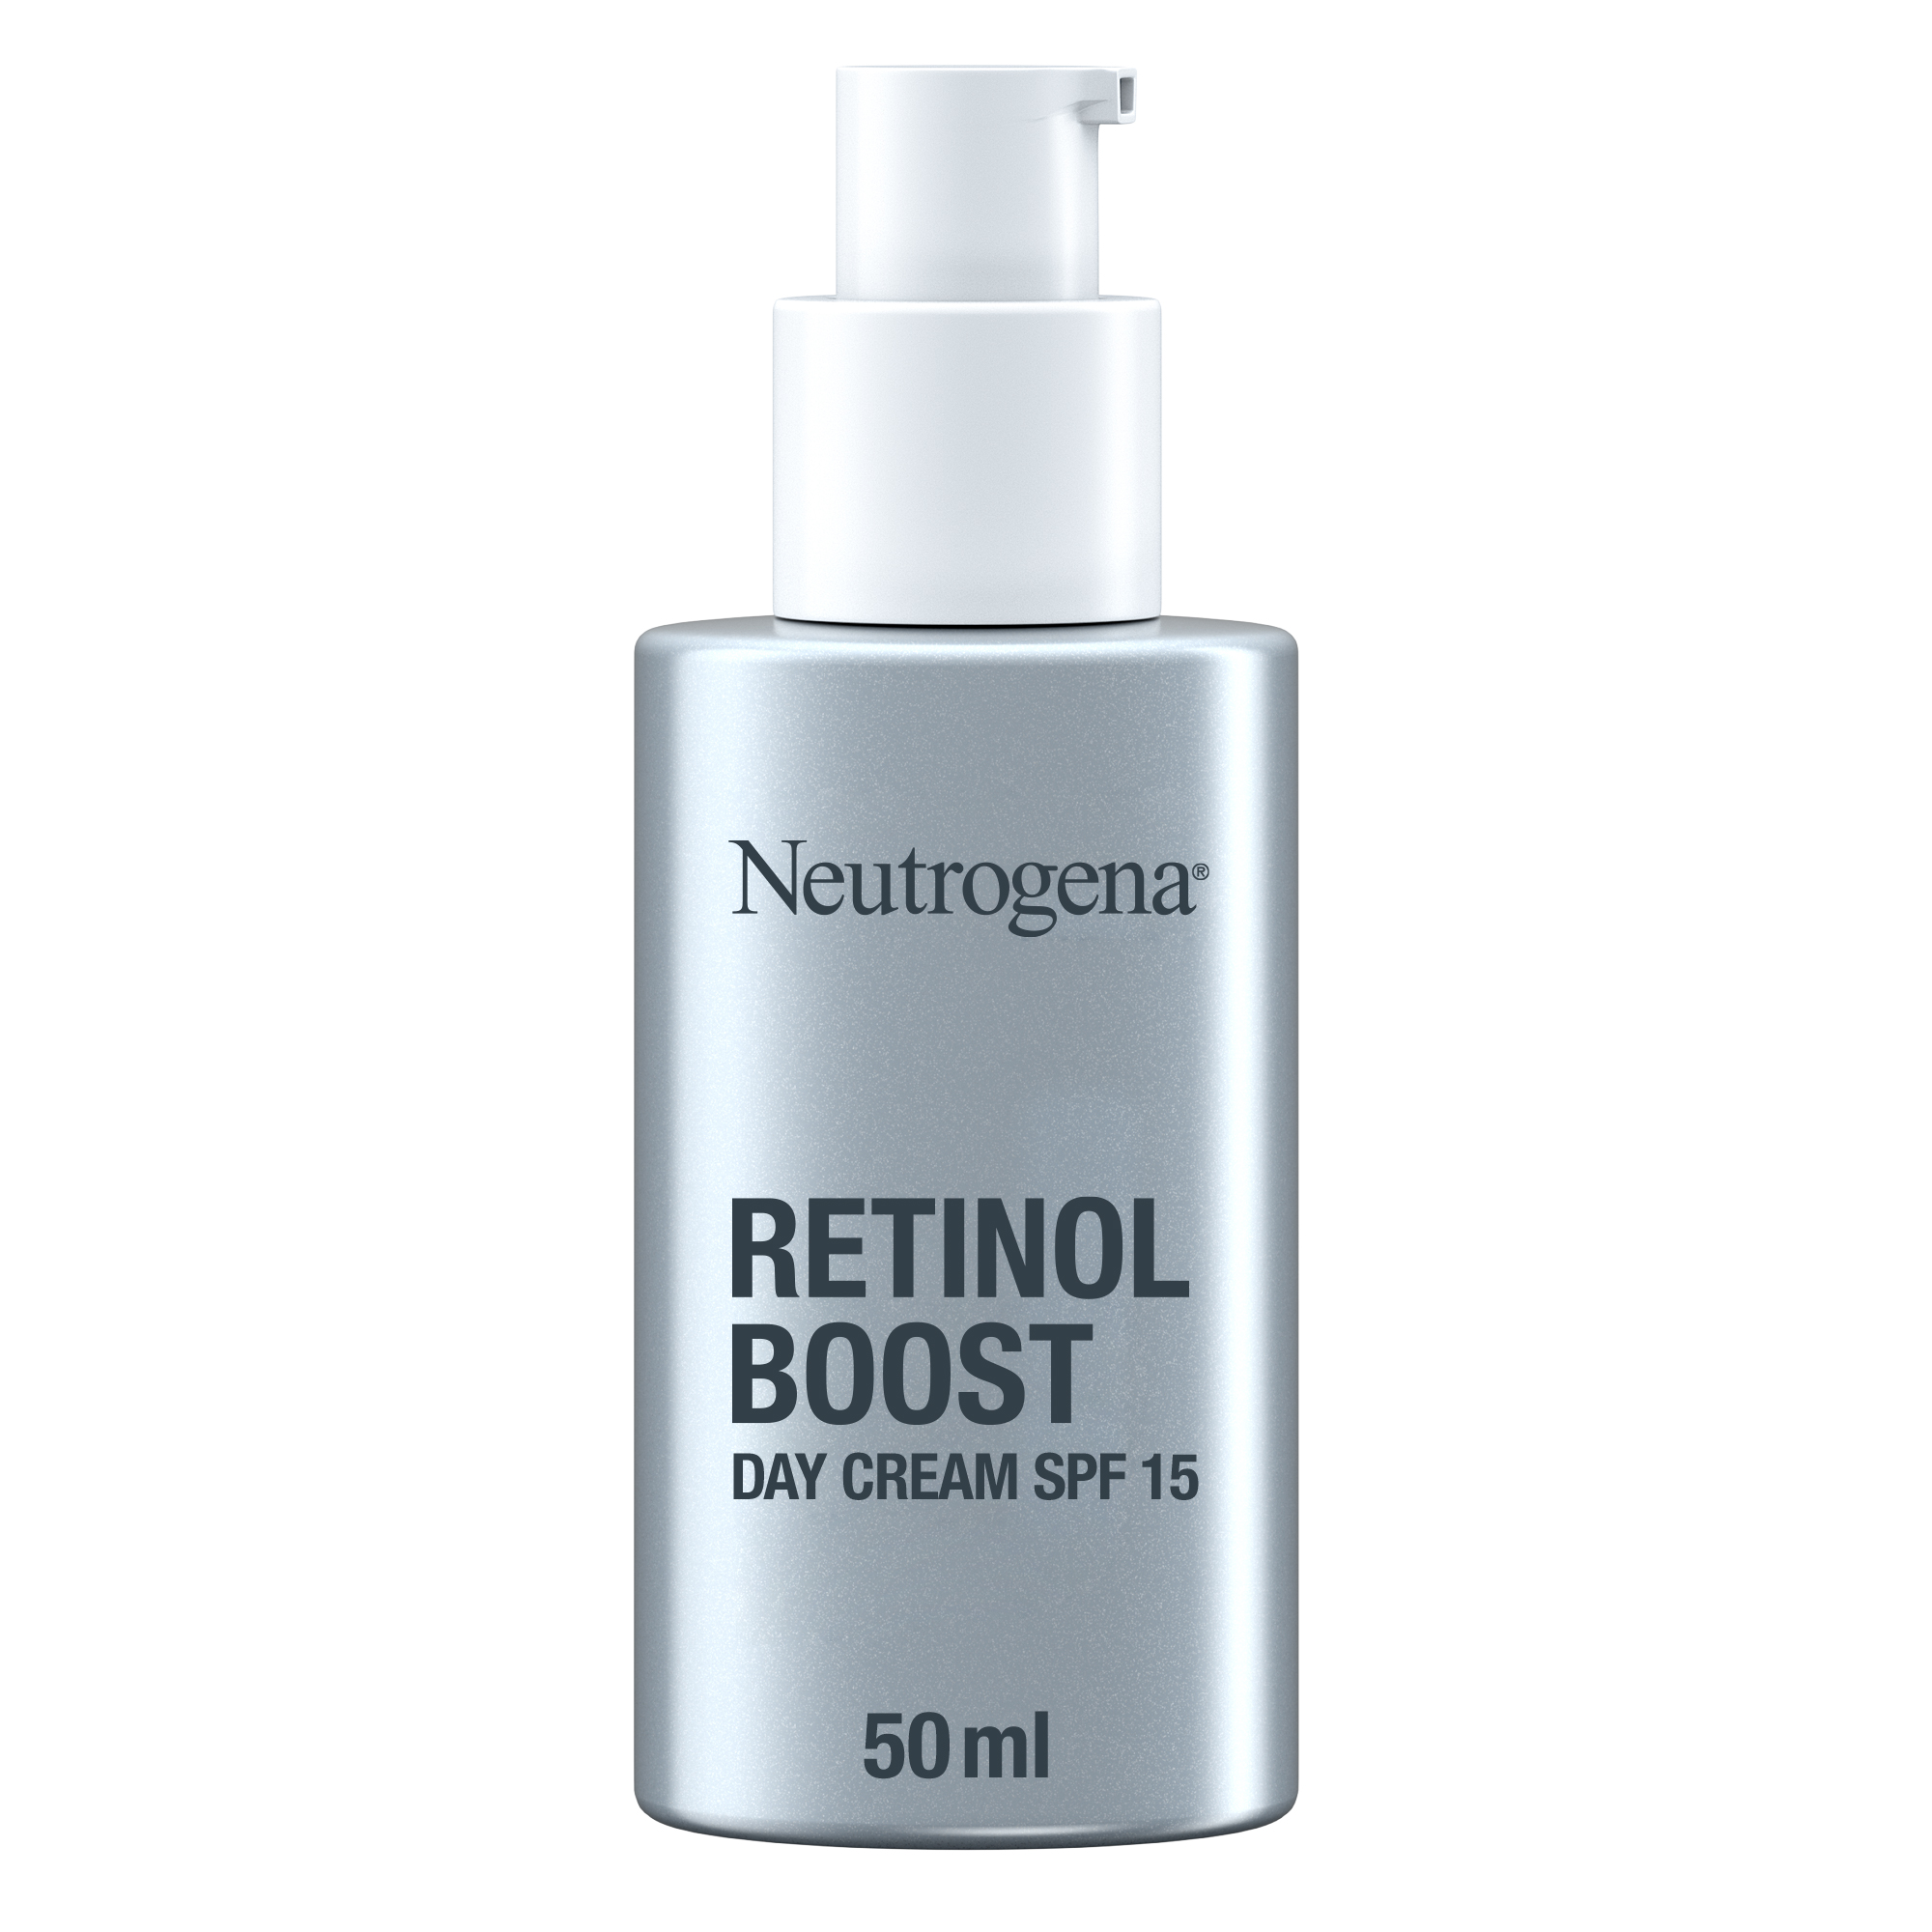 Neutrogena Retinol Boost Day Cream